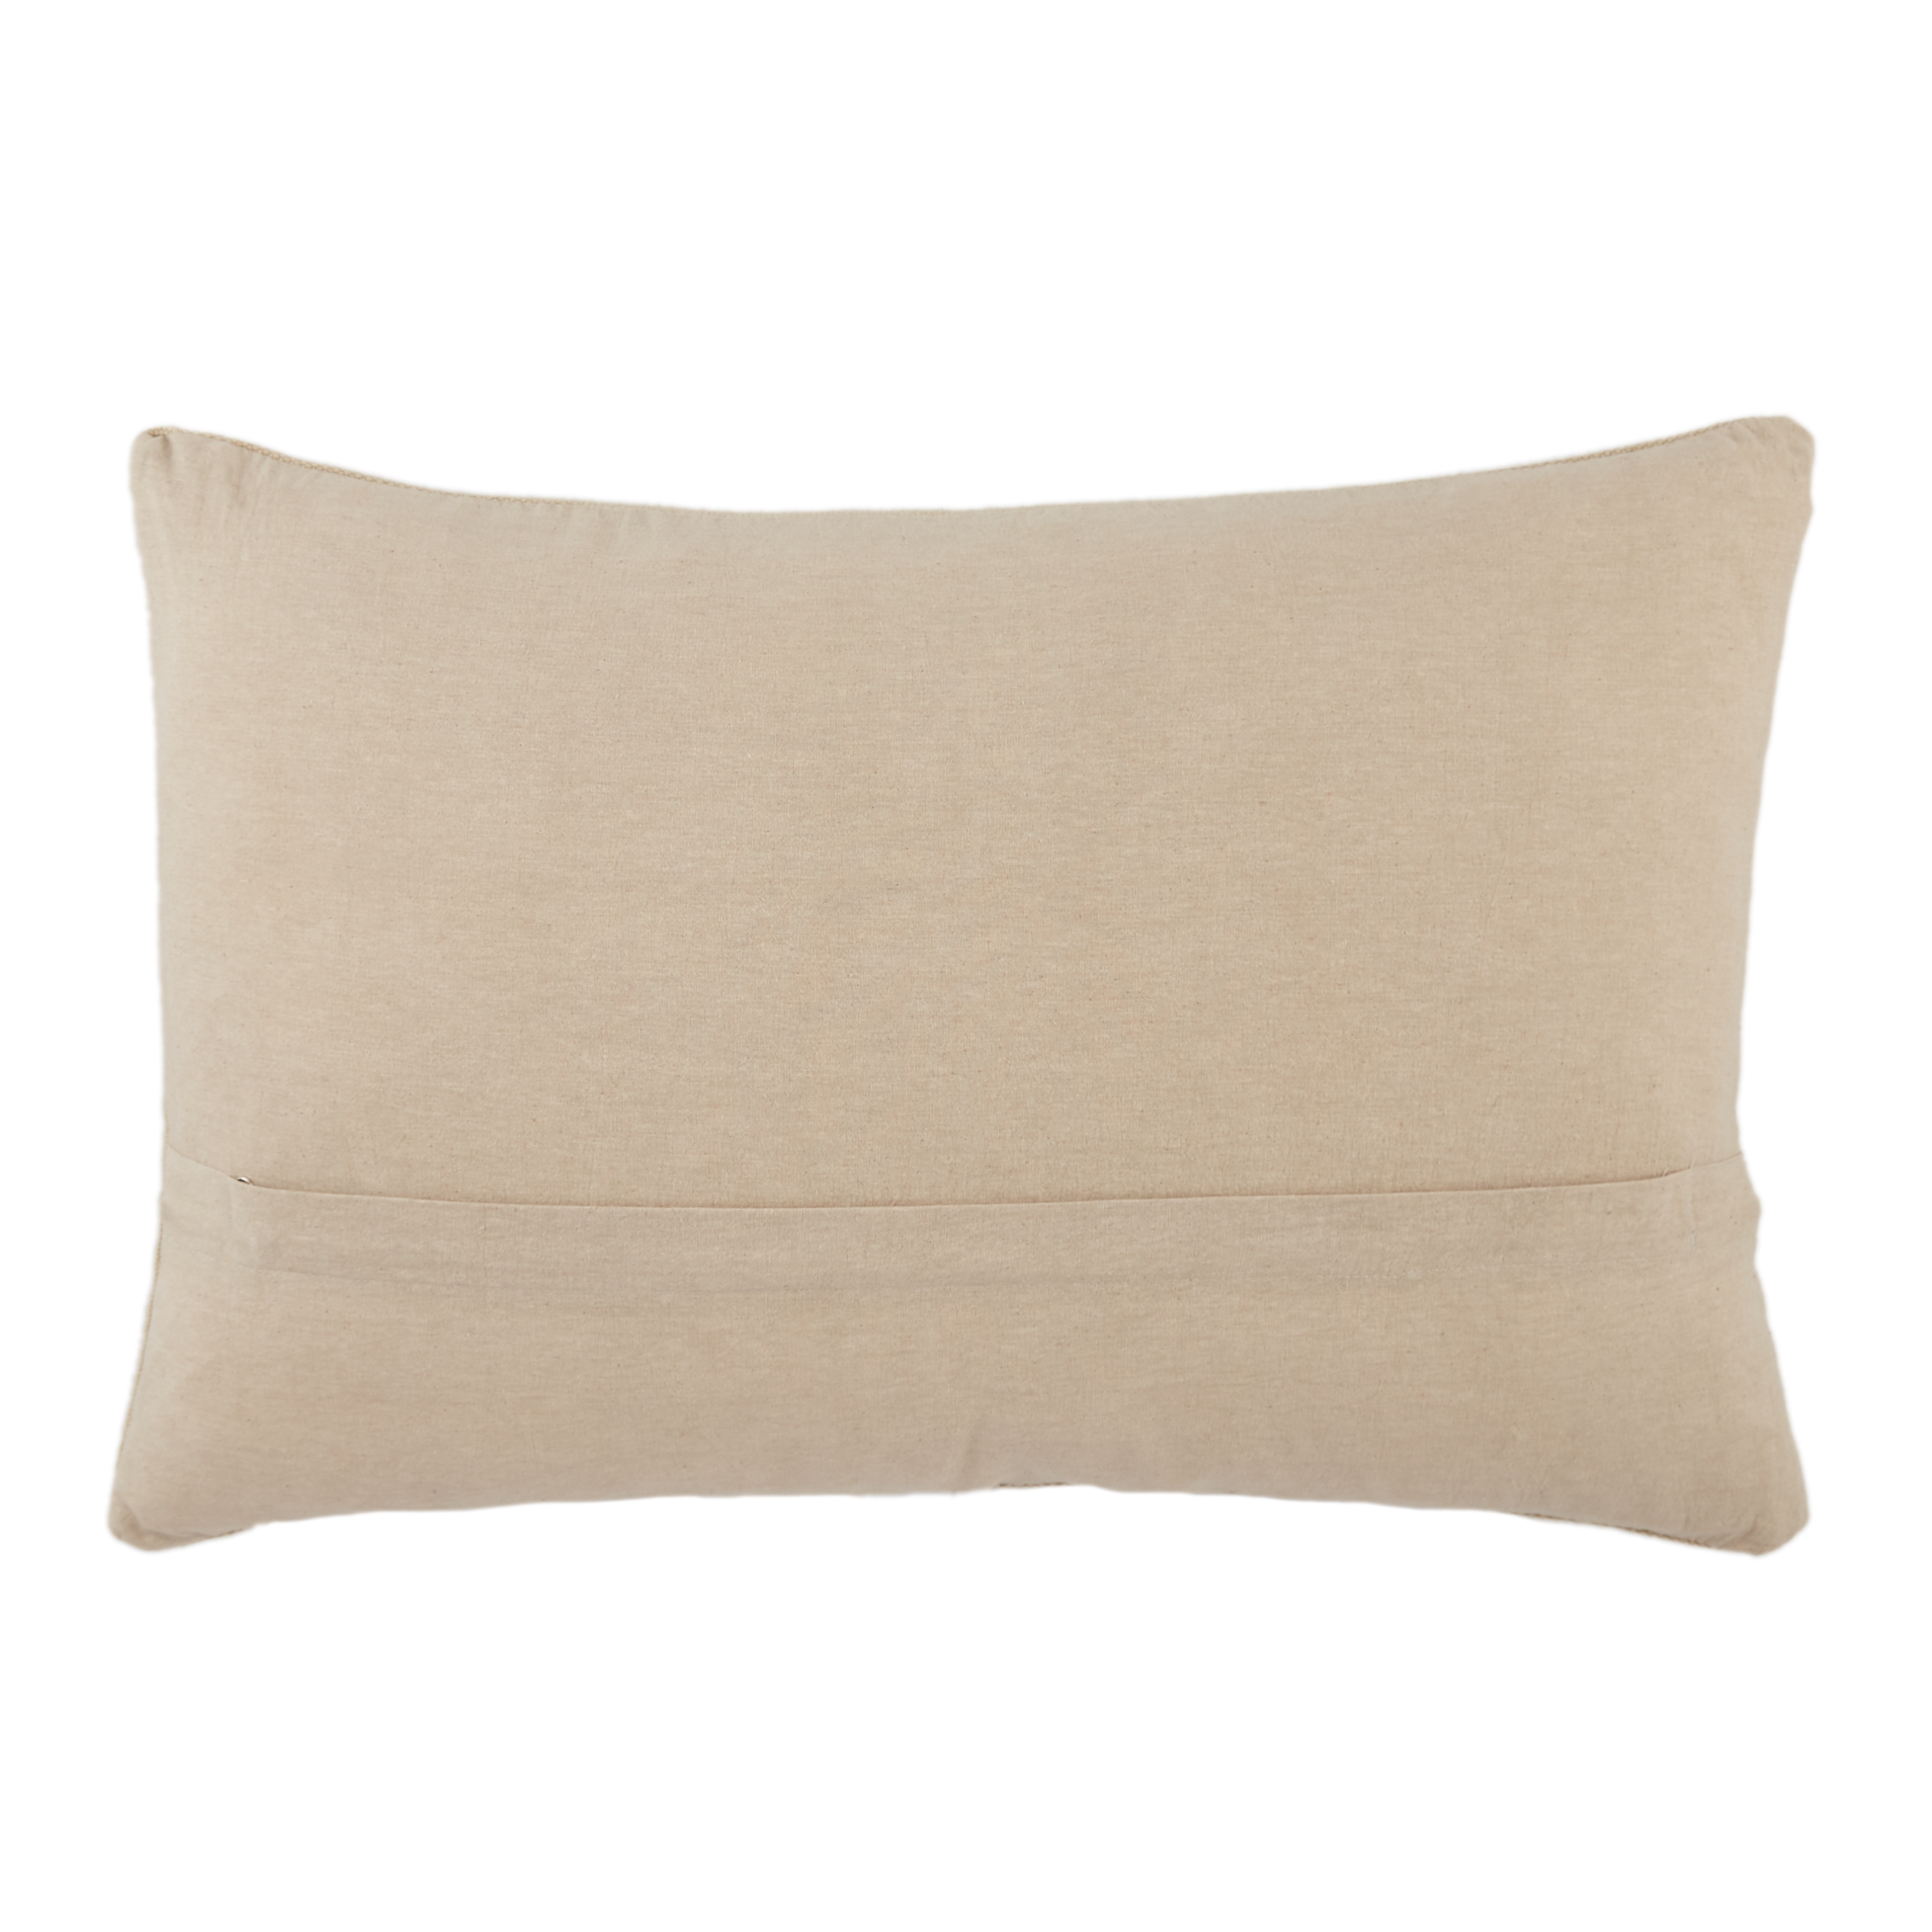 Randers Lumbar Pillow, 24" x 16" - Image 1